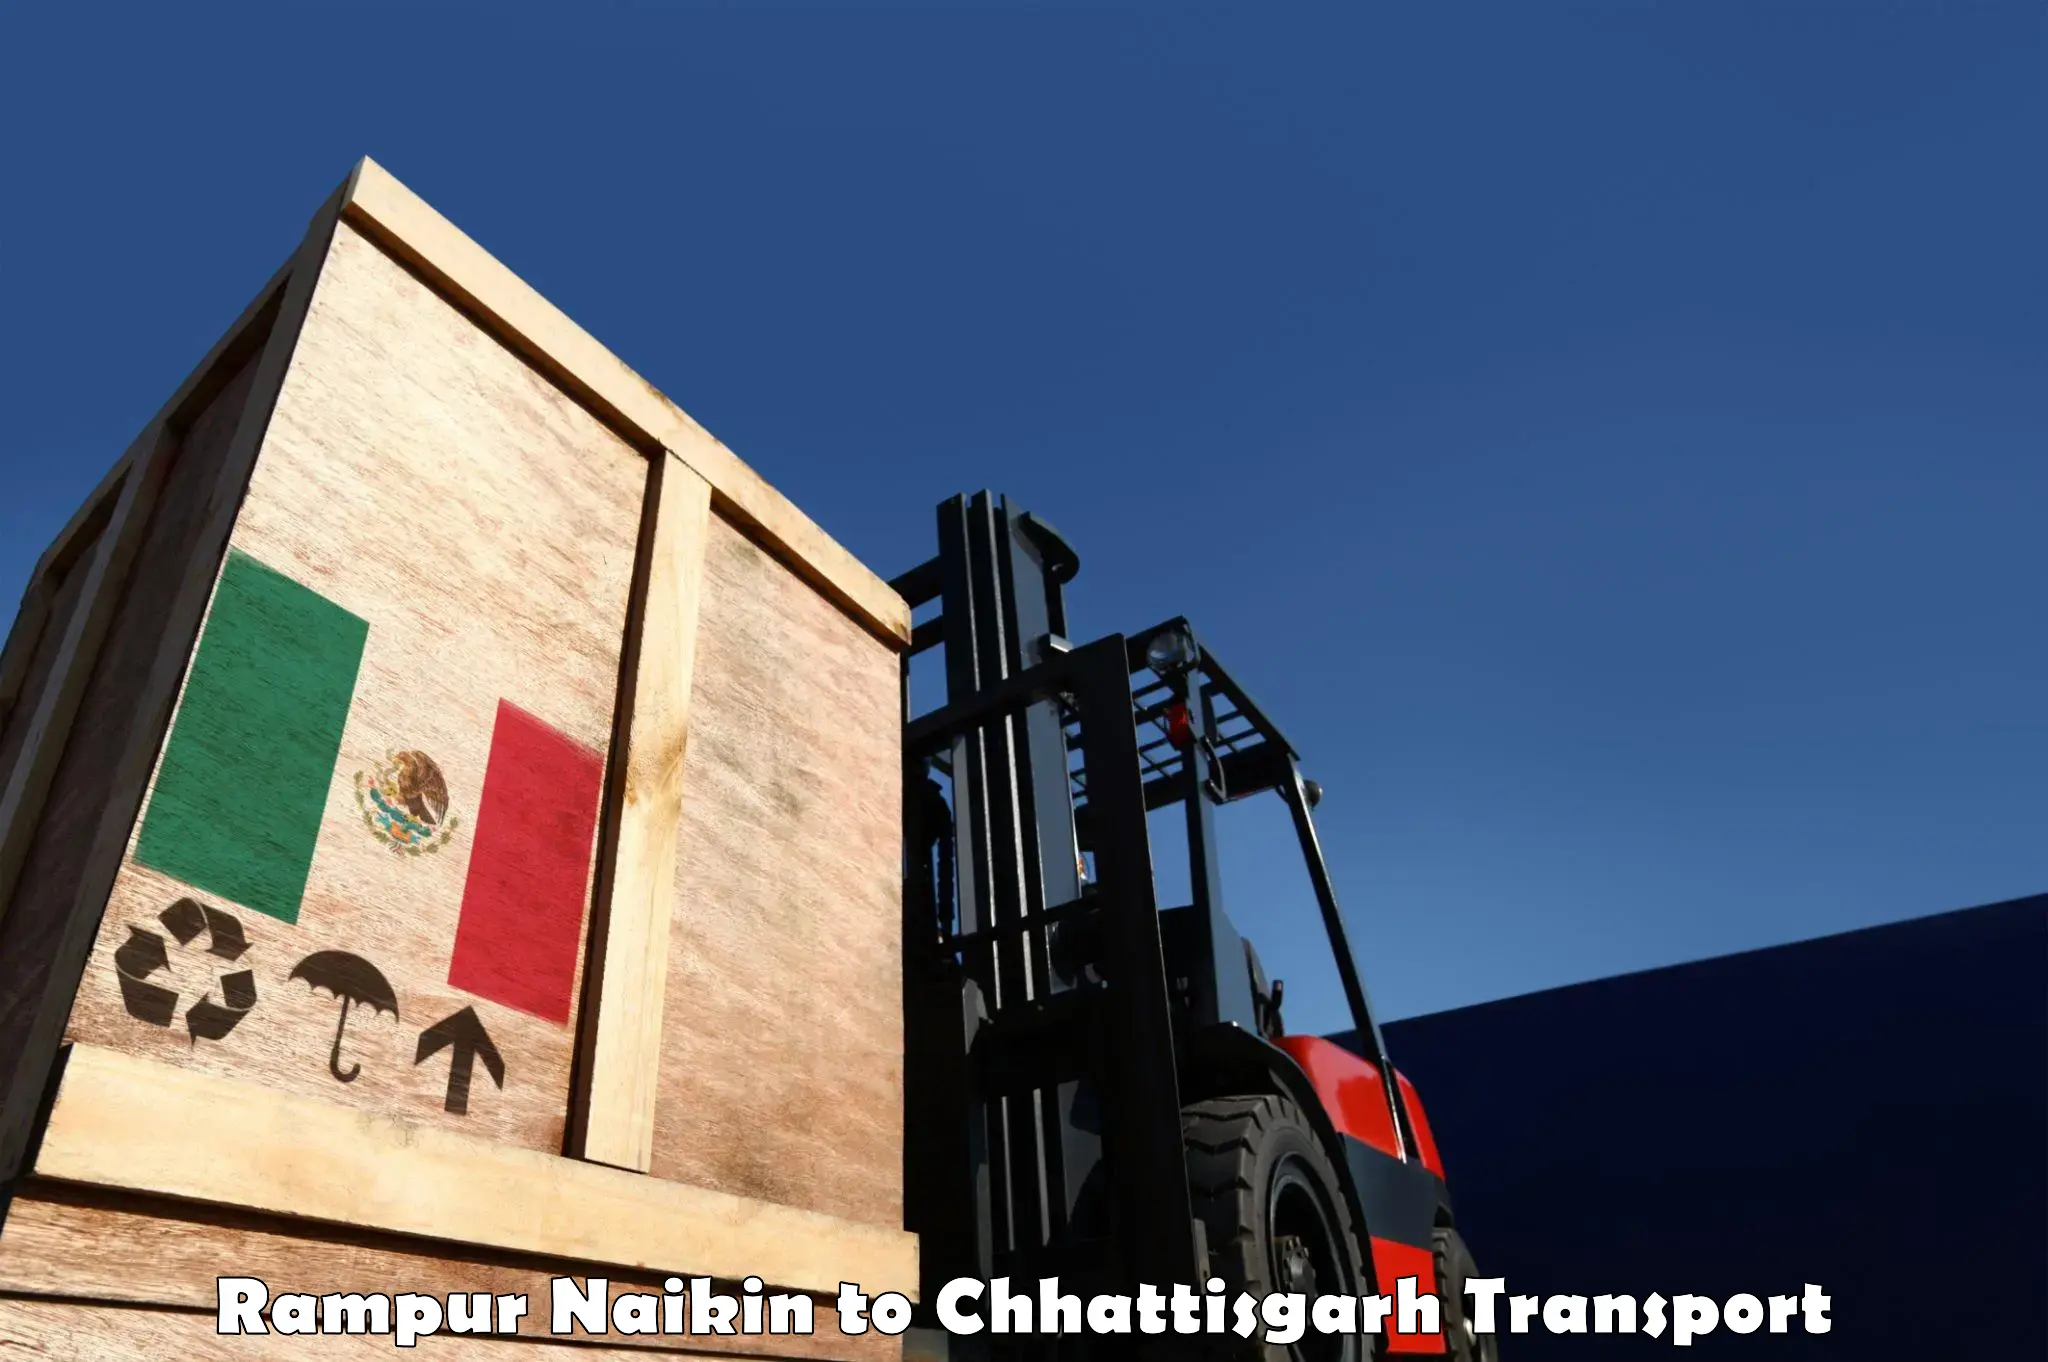 Truck transport companies in India Rampur Naikin to Raipur